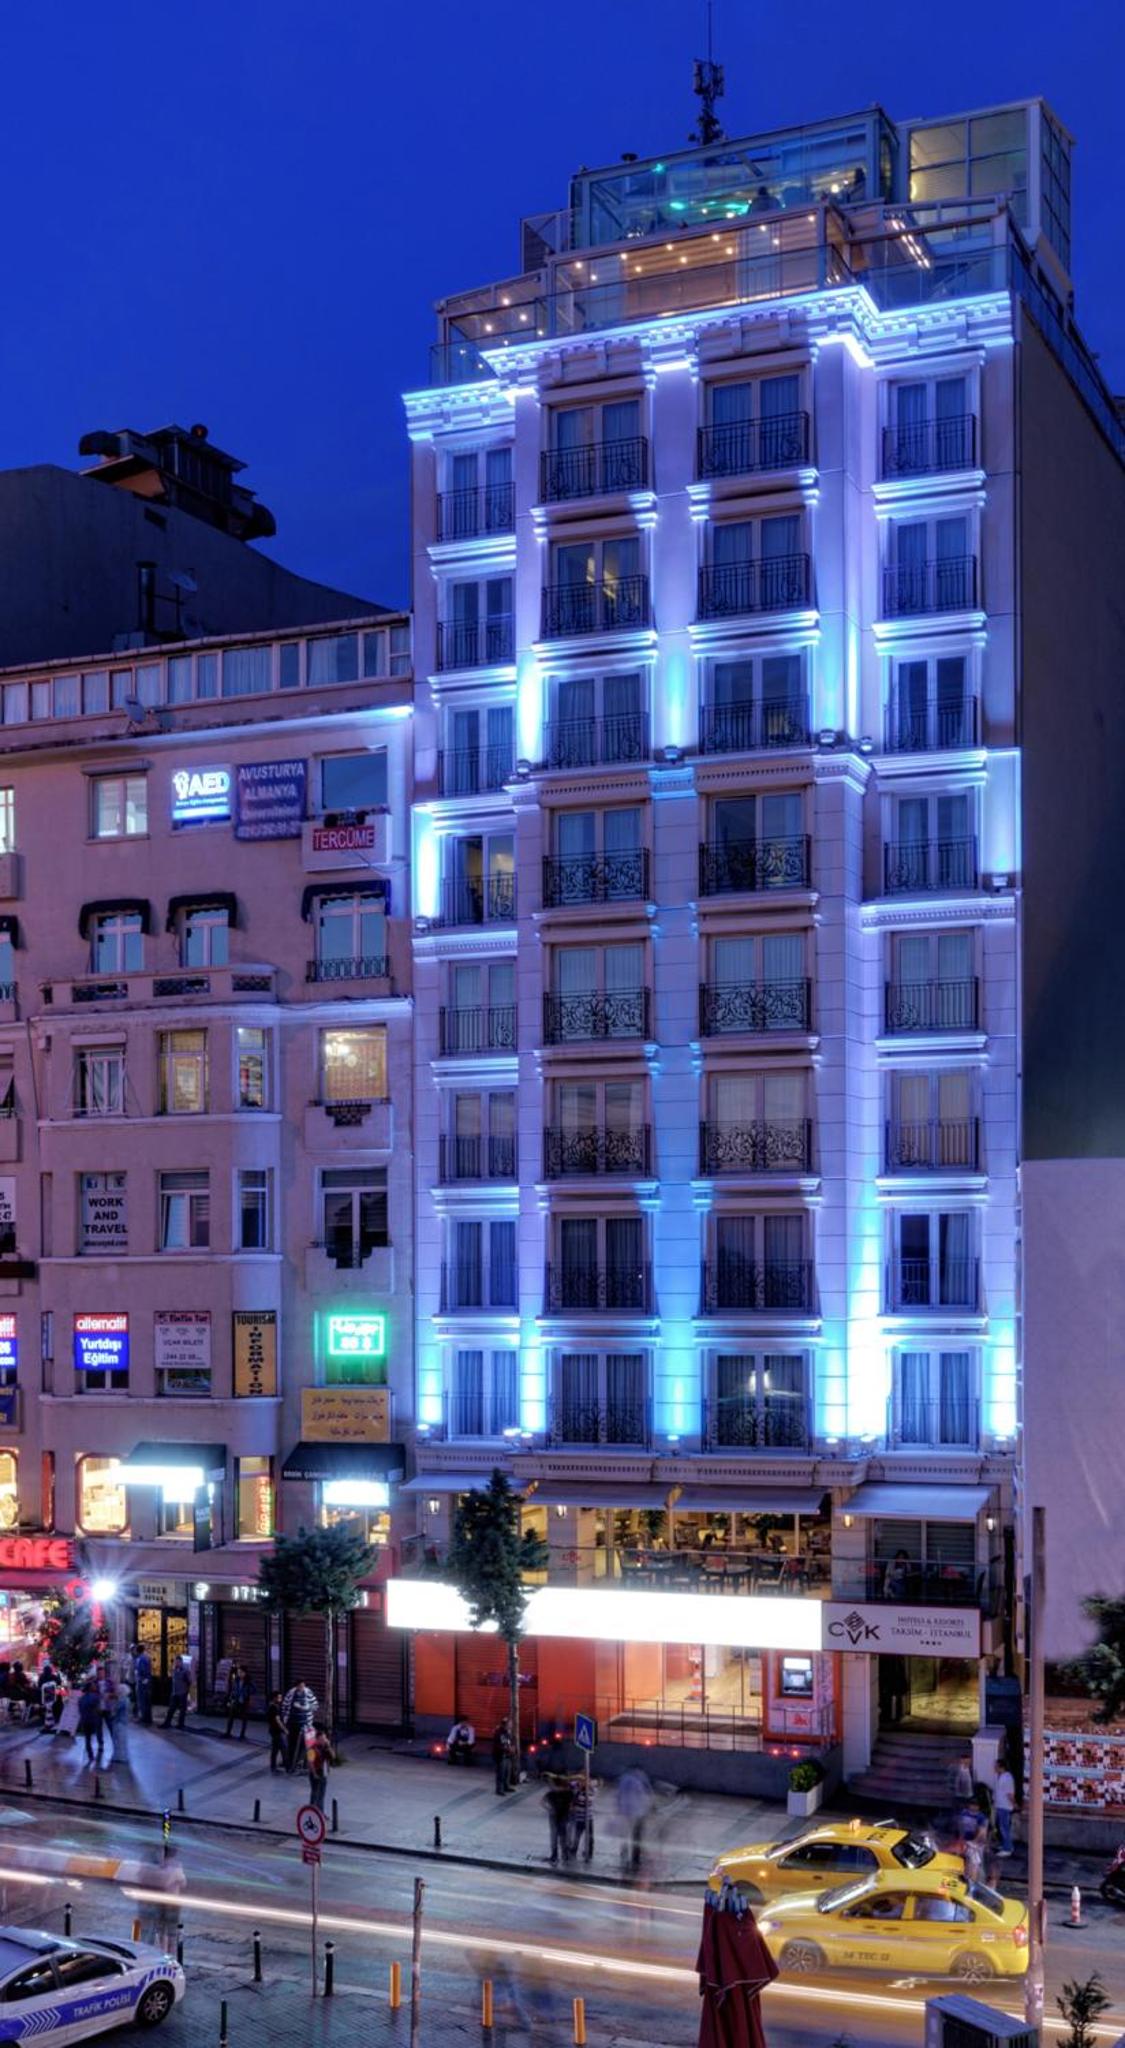 CVK Taksim Hotel